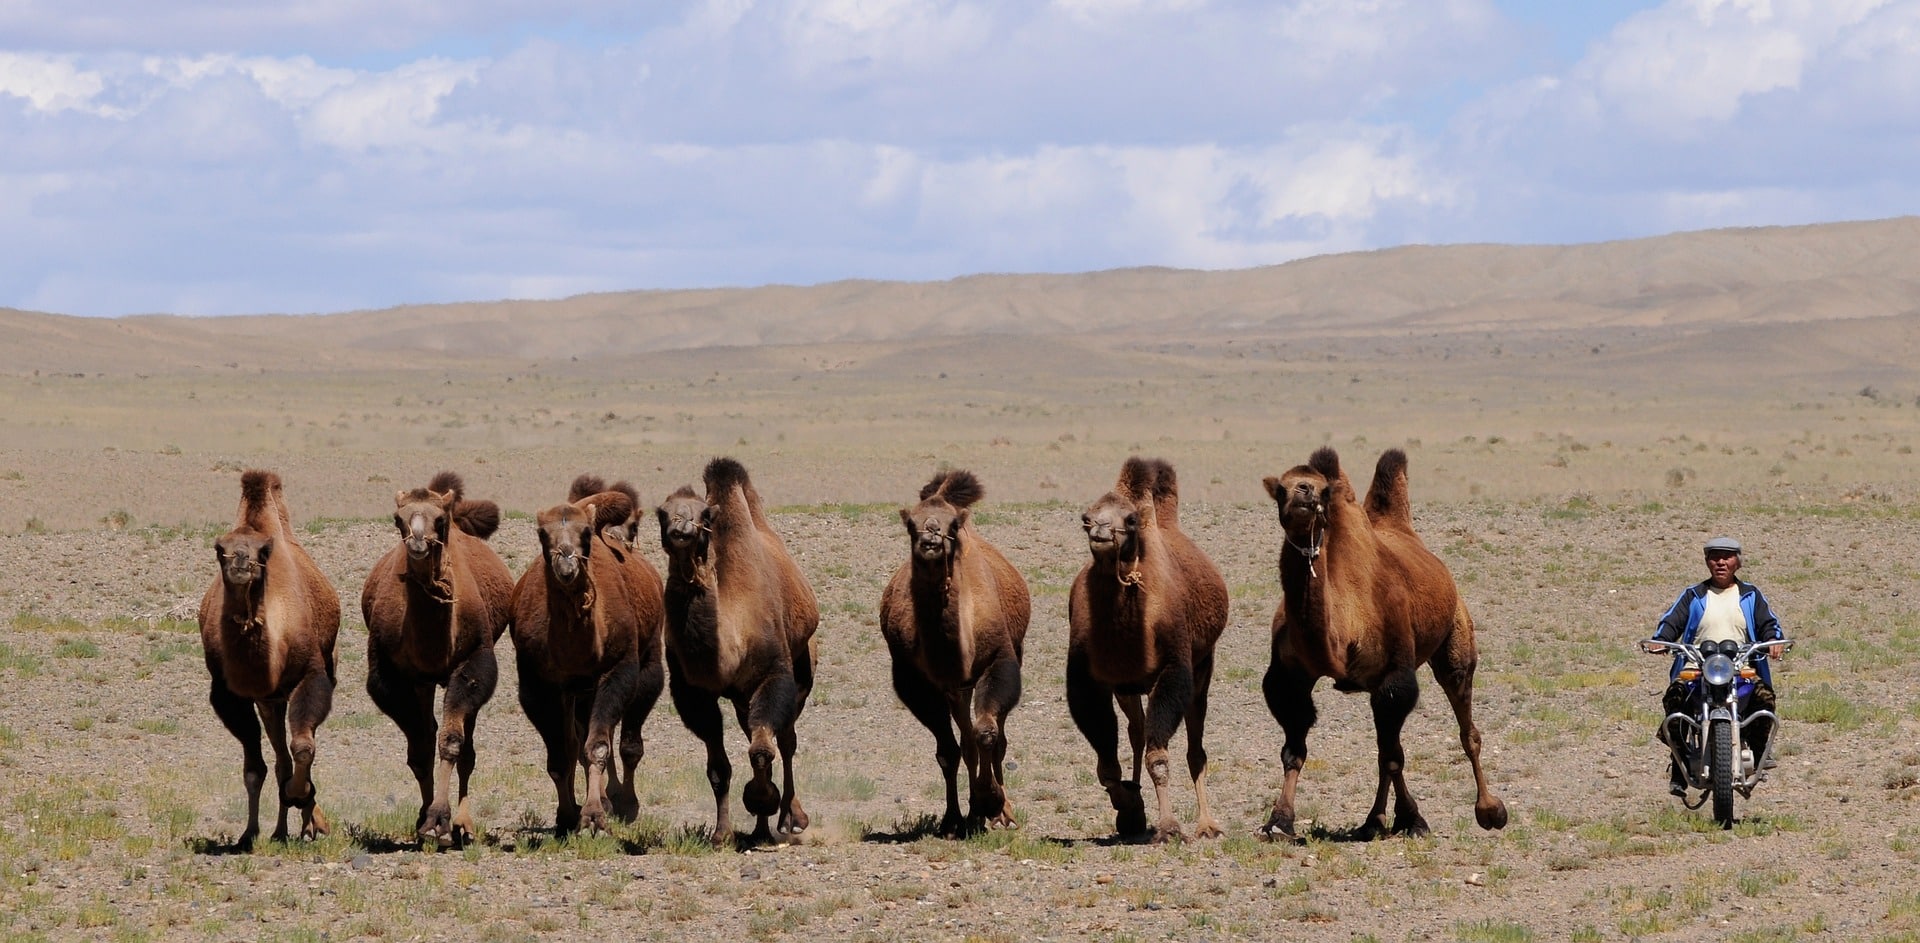 Désert de Gobi en Mongolie. 
Pixabay